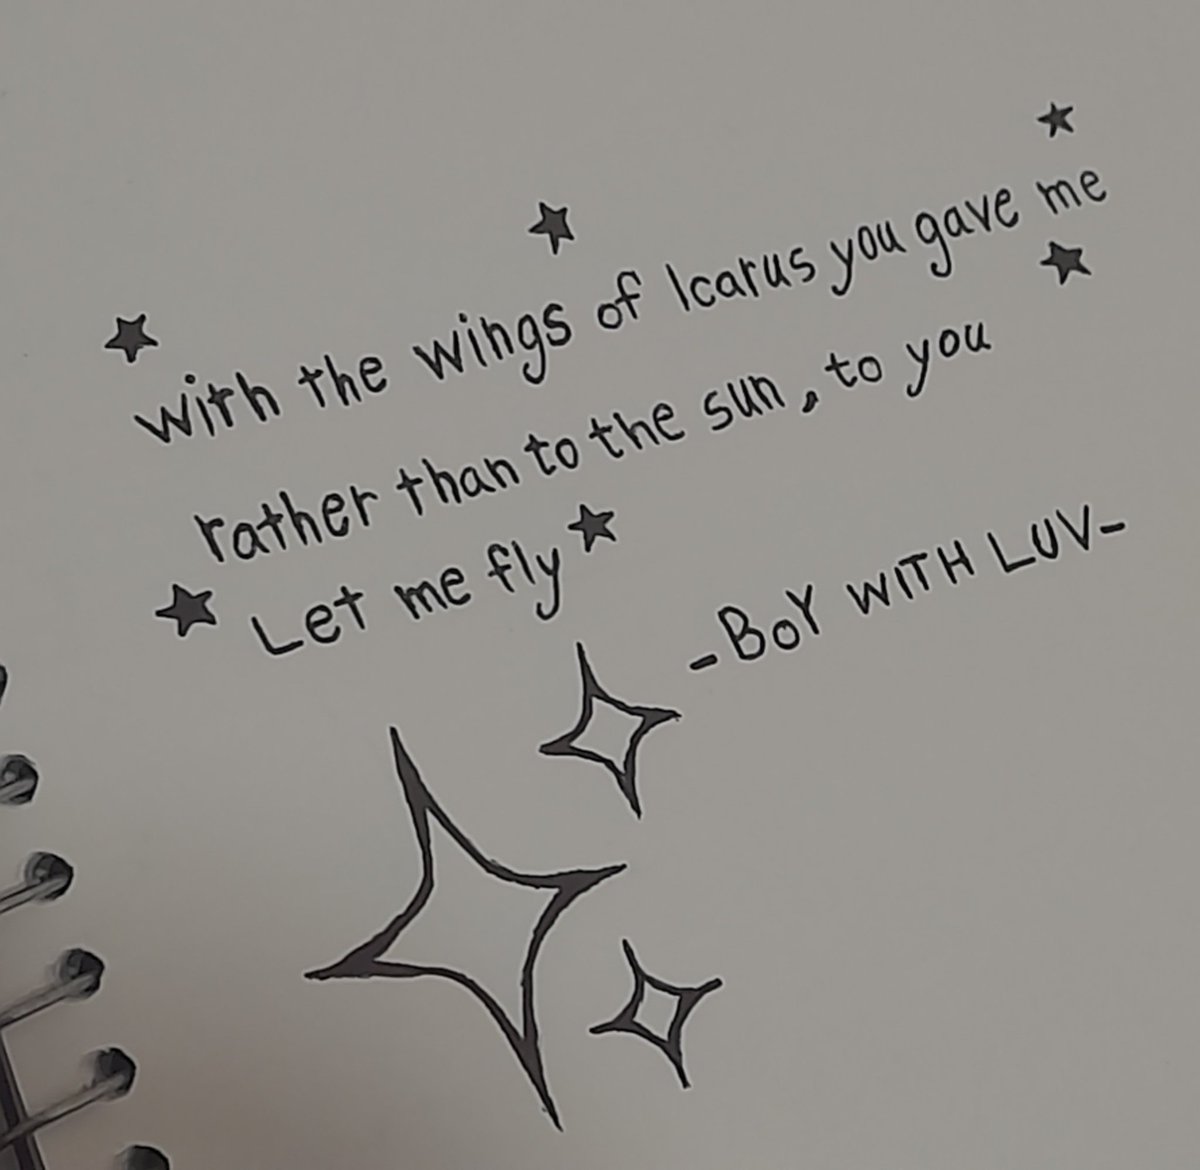 - BOY WITH LUV - 🌊

#beyond_army_handwriting #beyond_army_lyrics